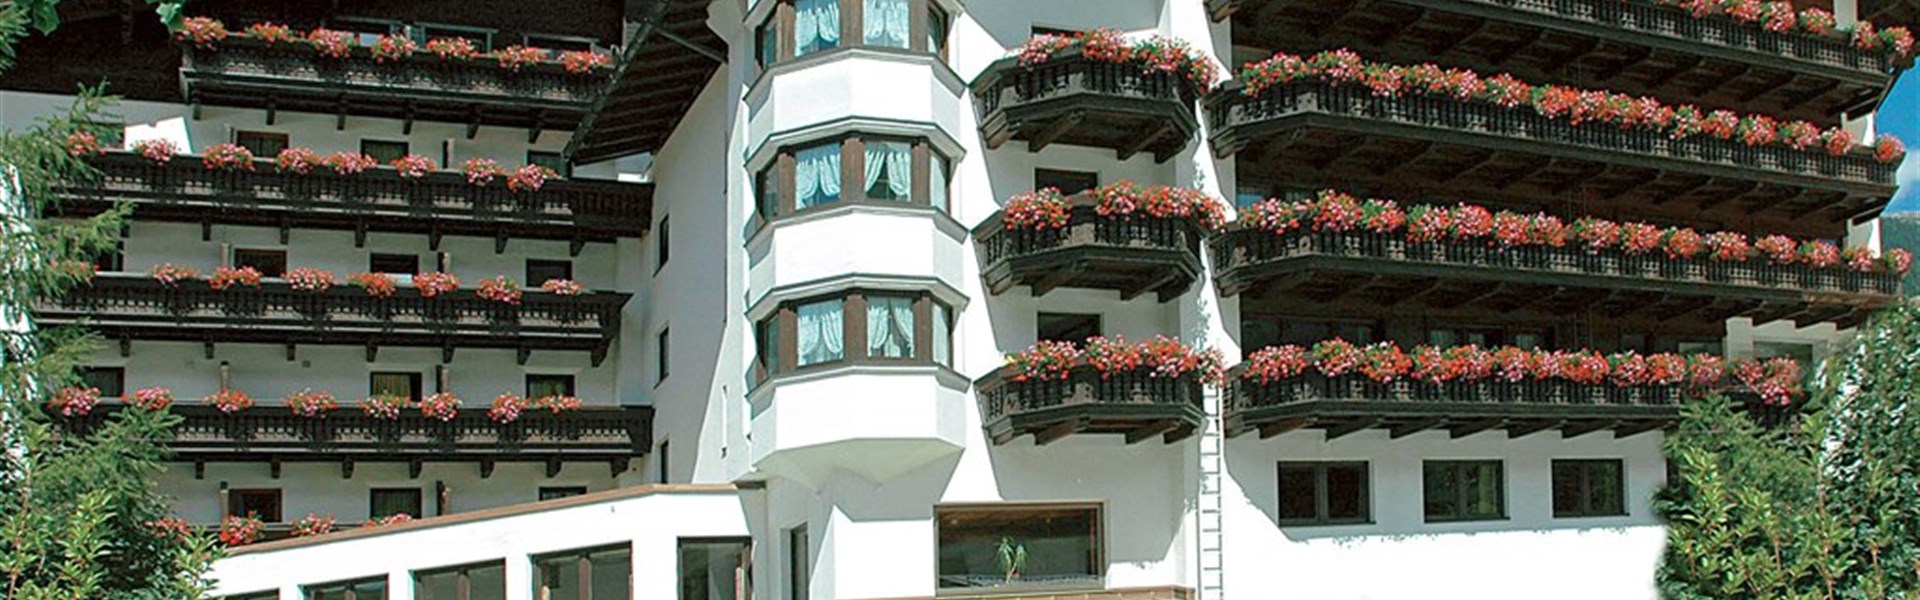 Hotel Arlberg (S) - 